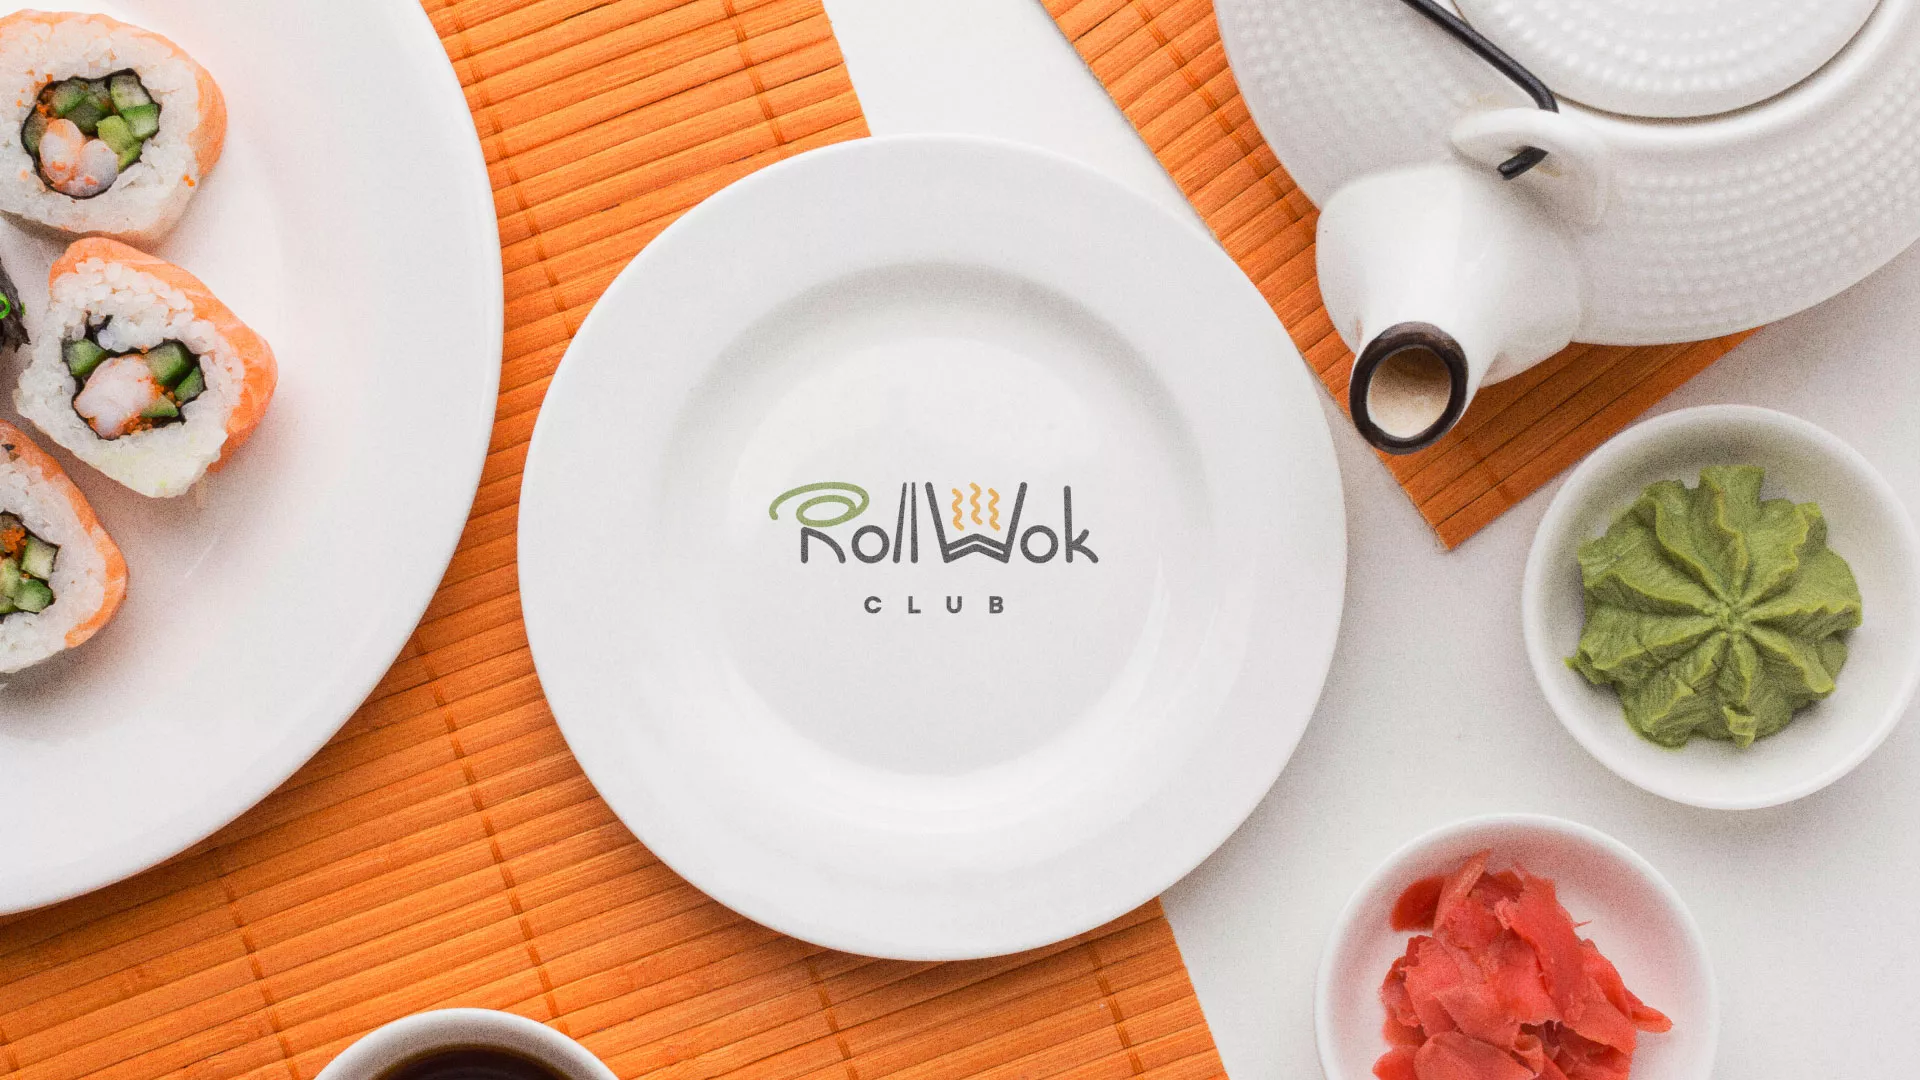 Разработка логотипа и фирменного стиля суши-бара «Roll Wok Club» в Билибино